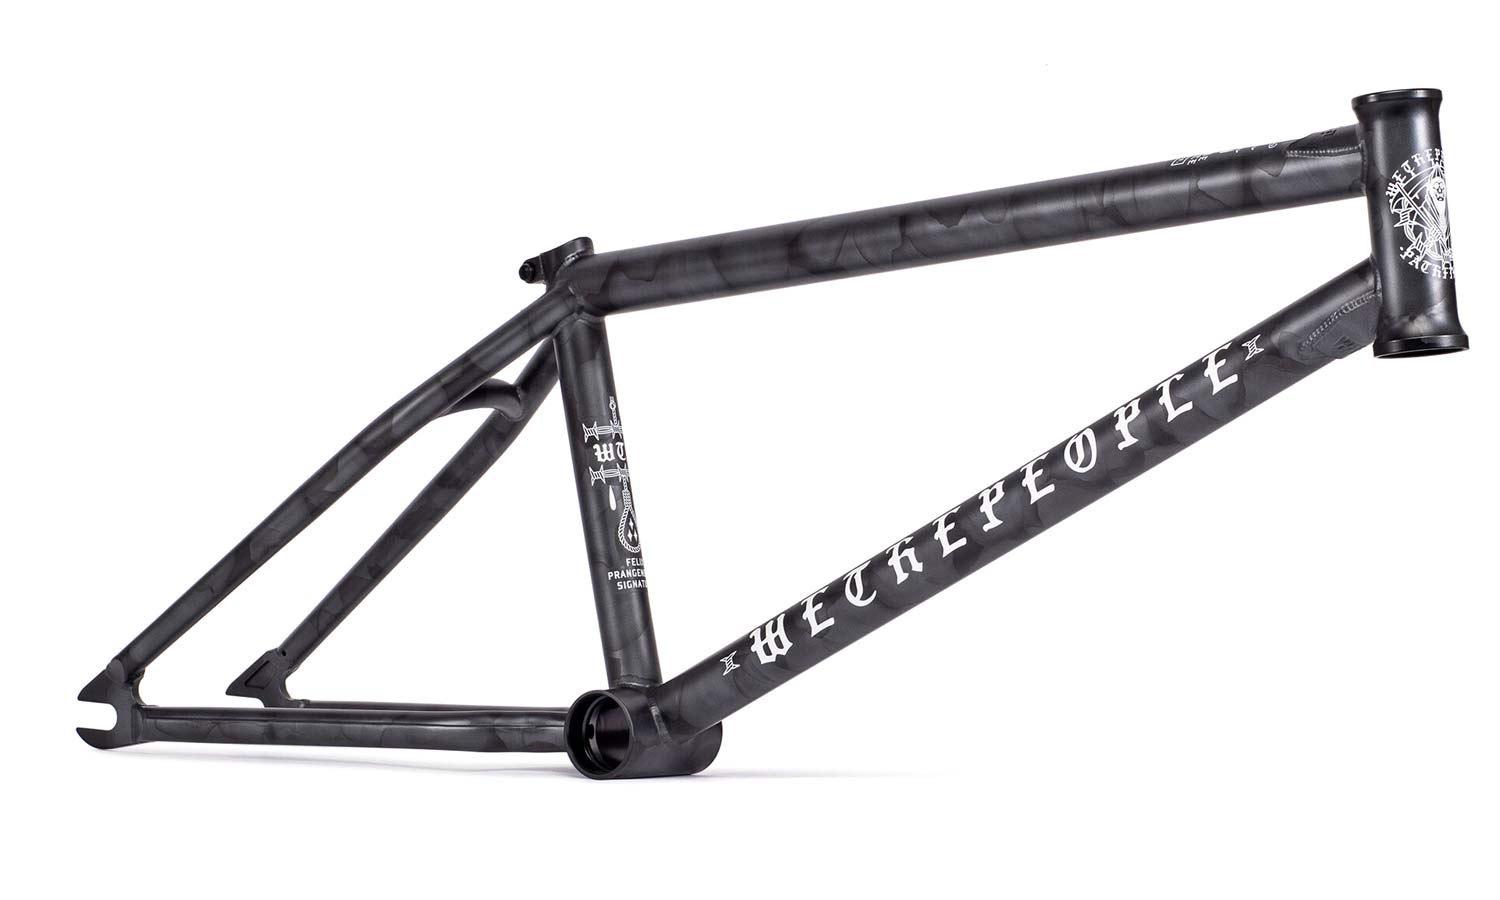 WTP Pathfinder BMX bike, Wethepeople Felix Prangenberg Signature Pathfinder steel street BMX frame